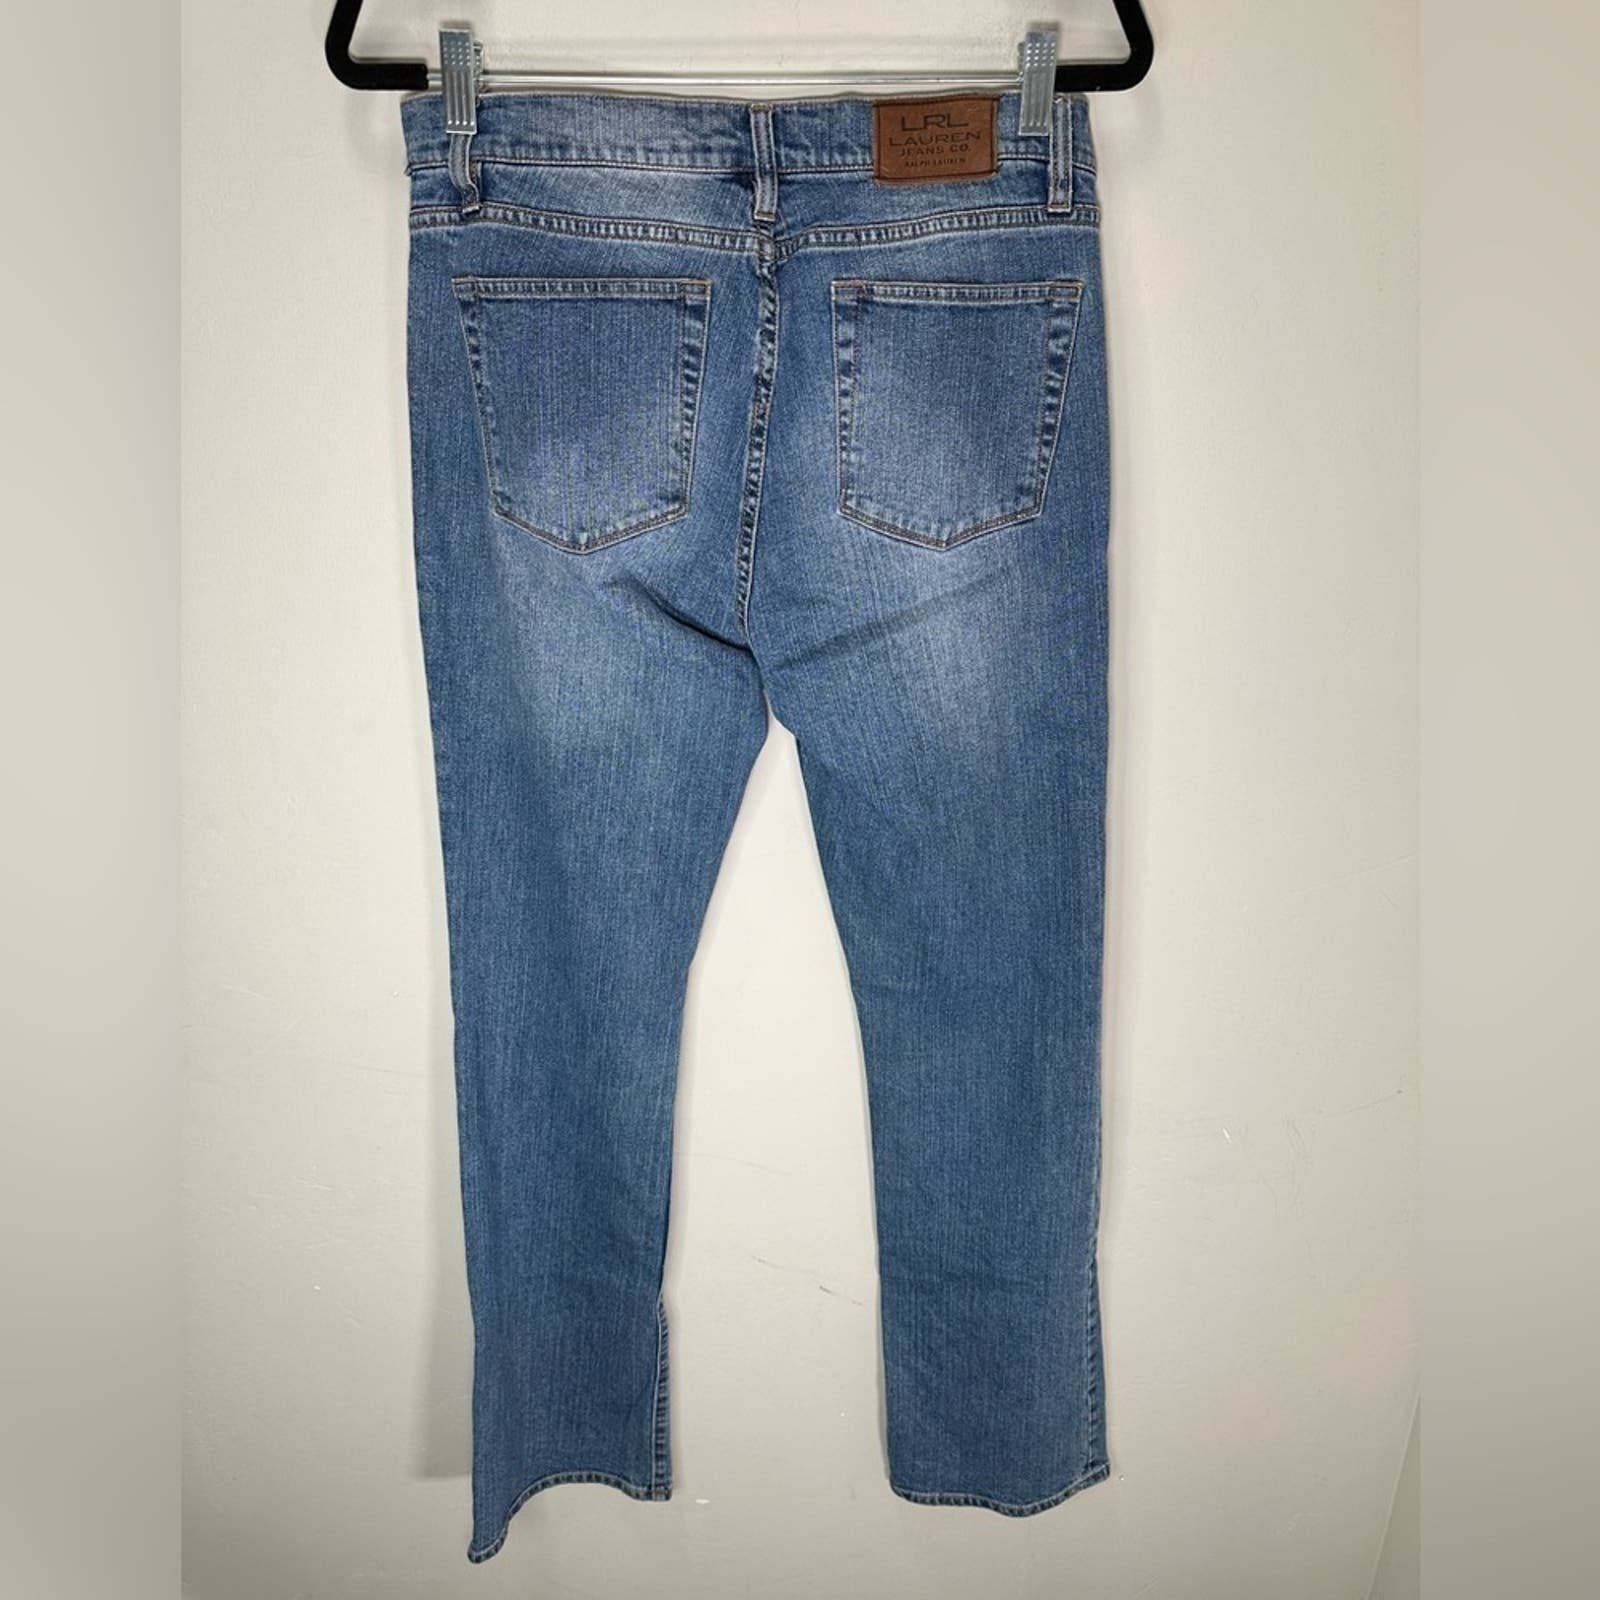 save up to 70% Ralph Lauren Women’s Premium Flare Jeans size 6 h2GF1iVAl Online Shop